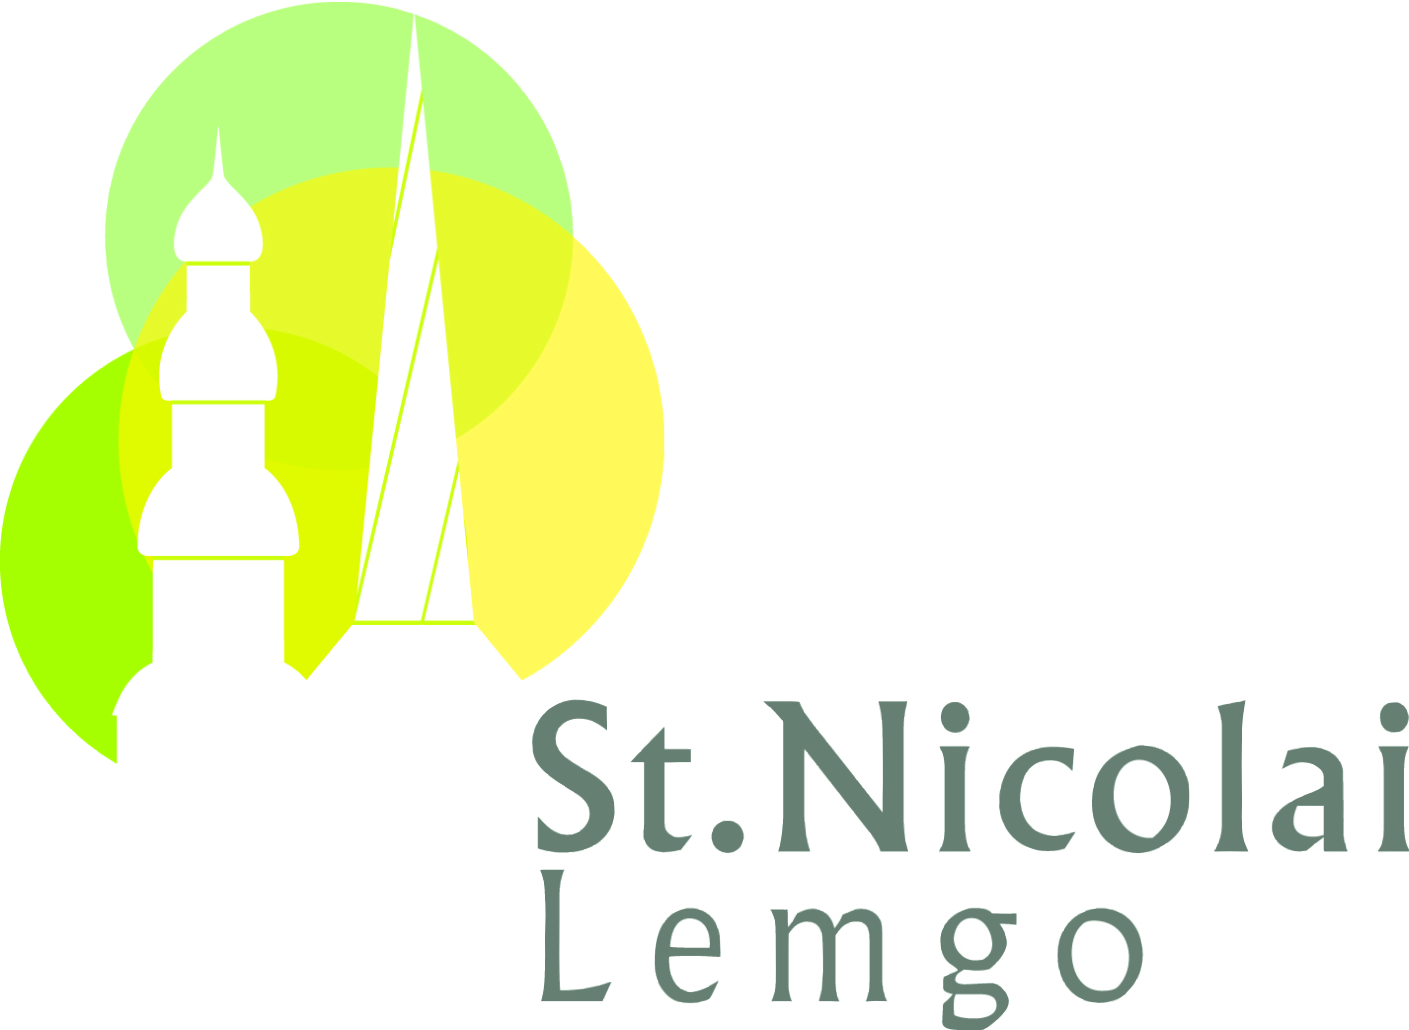 St. Nicolai Lemgo